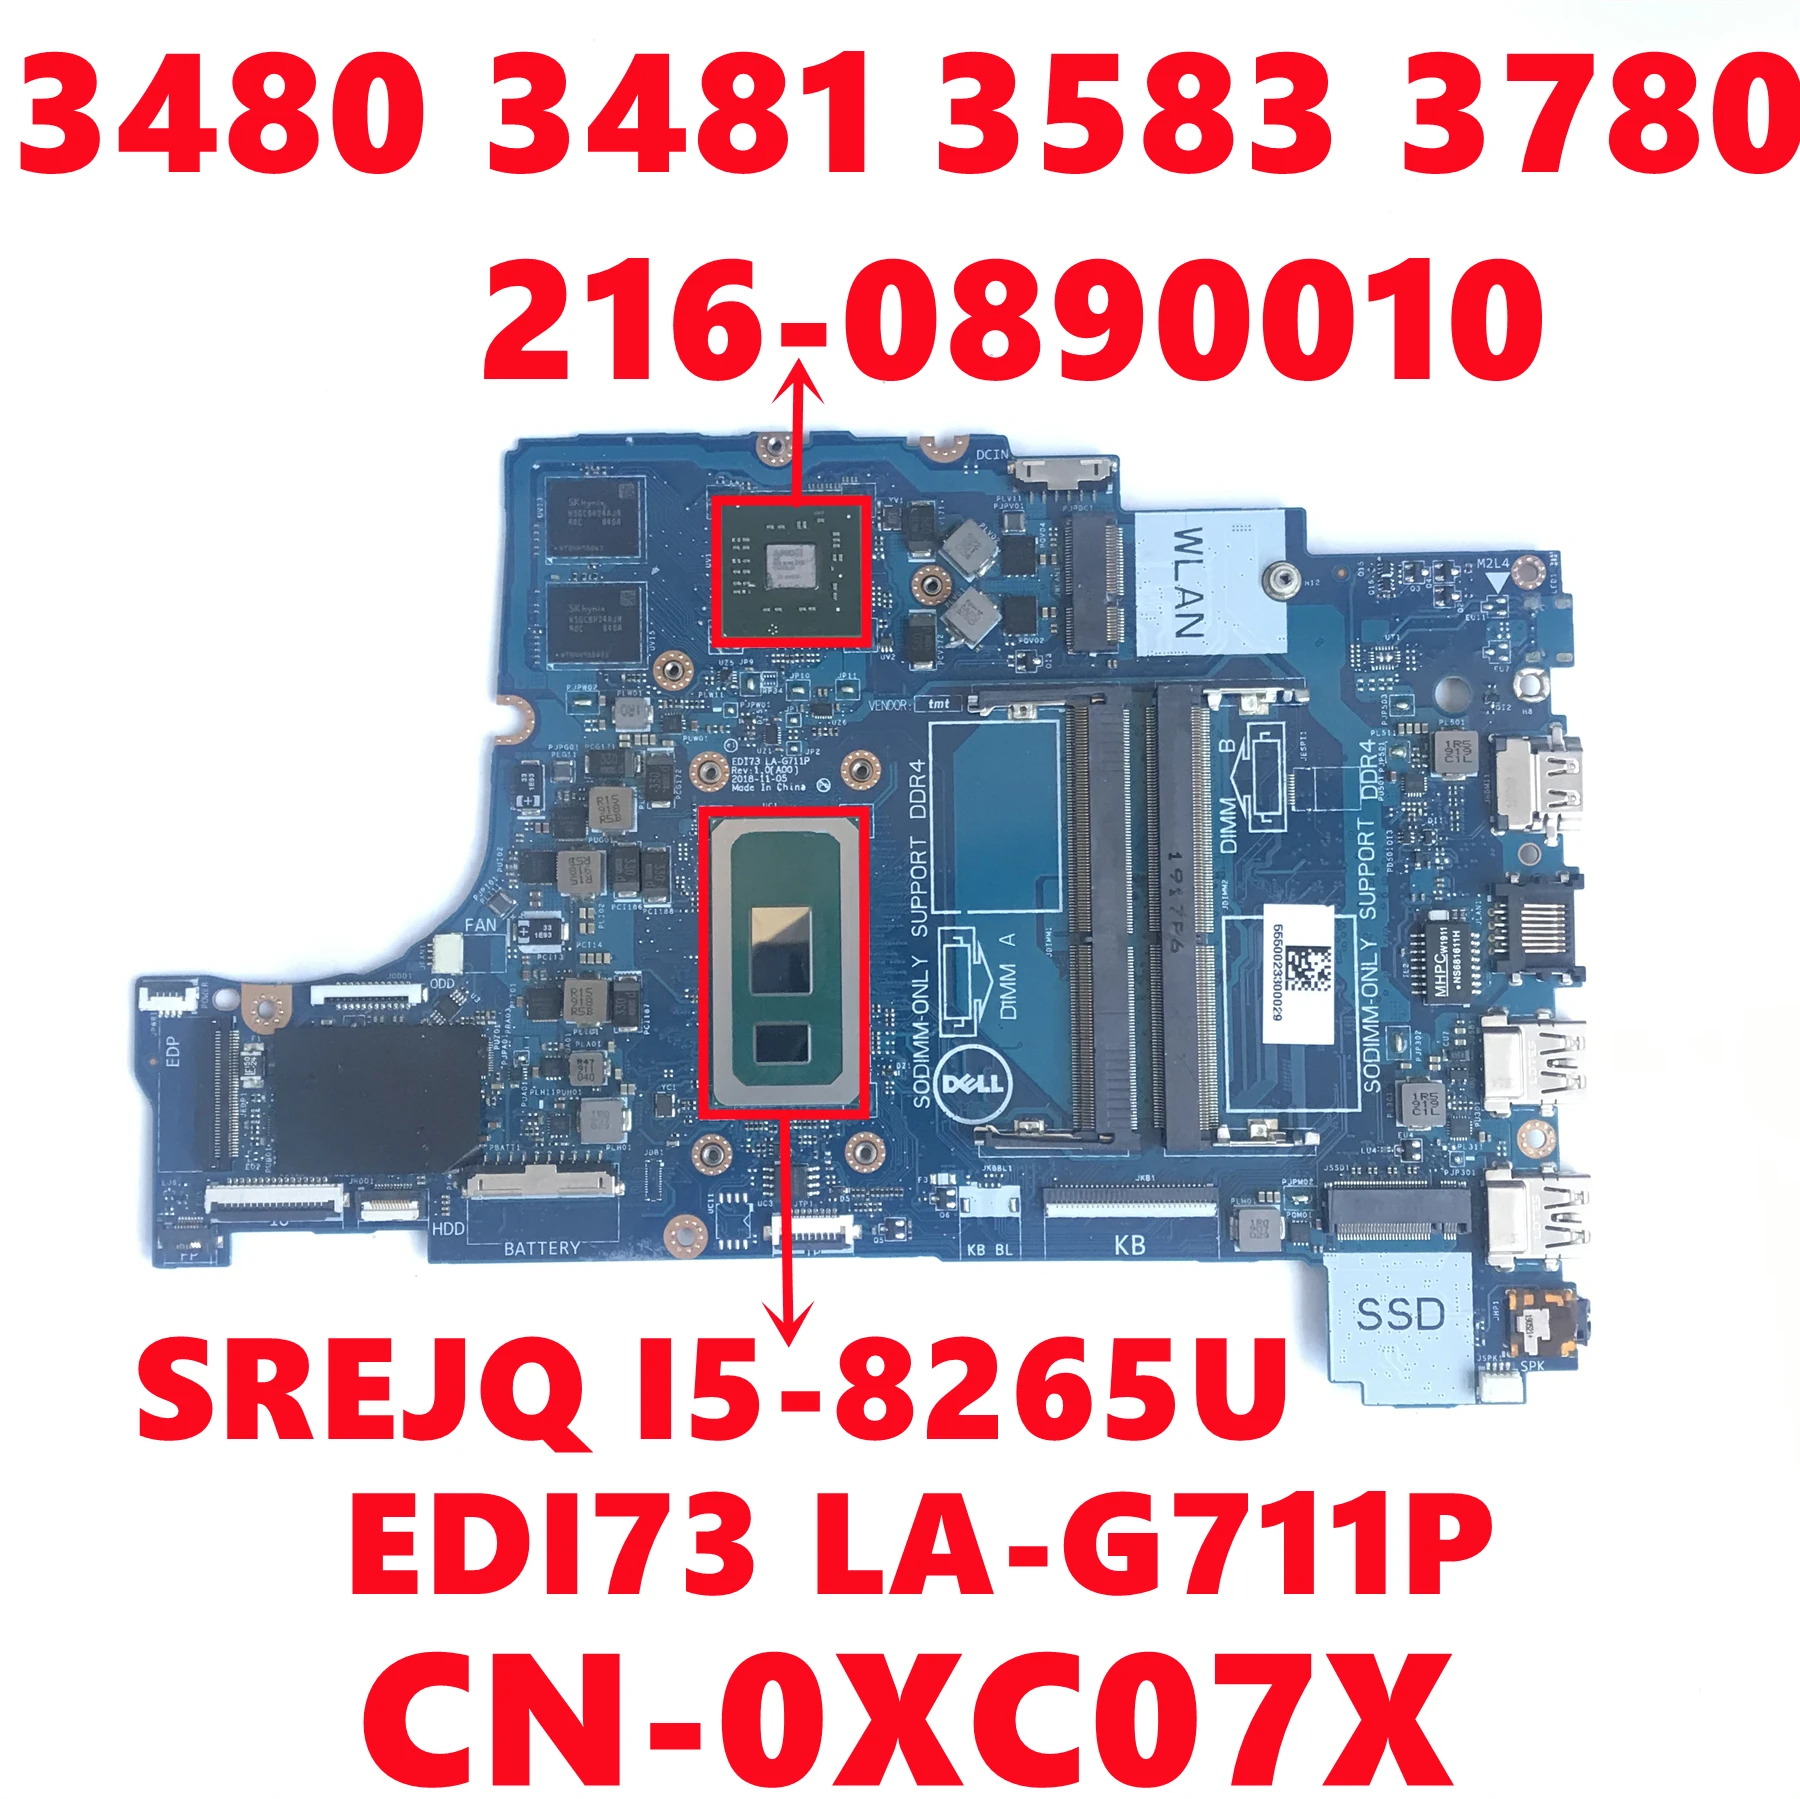 

CN-0XC07X 0XC07X XC07X For Dell Vostro 3480 3481 3583 3780 Laptop Motherboard EDI73 LA-G711P W/ I5-8265U 216-0890010 Fully Test